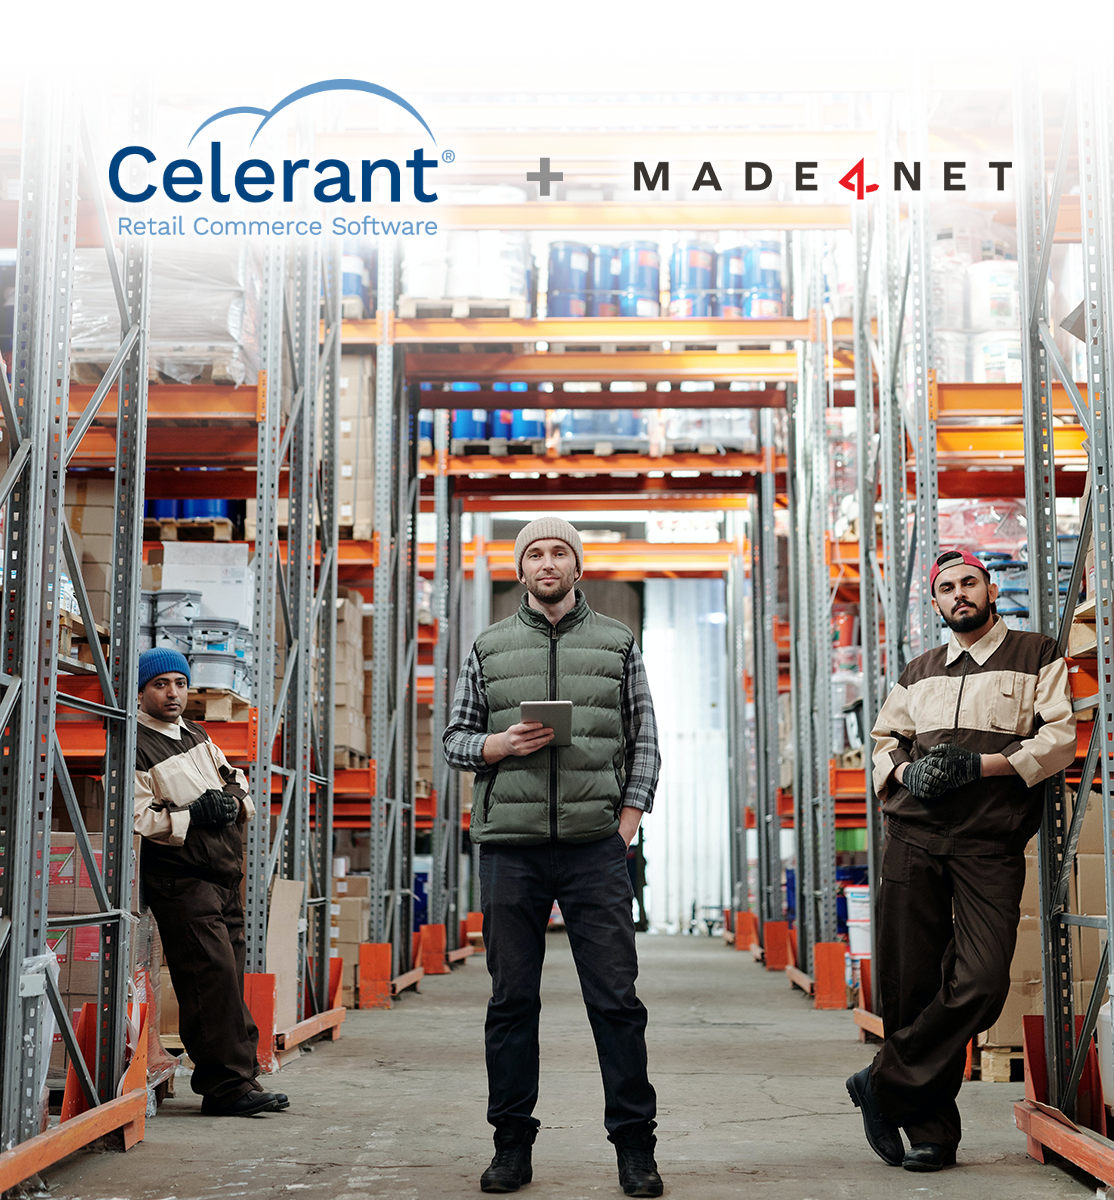 Made4net and Celerant: Warehouse Management Technology